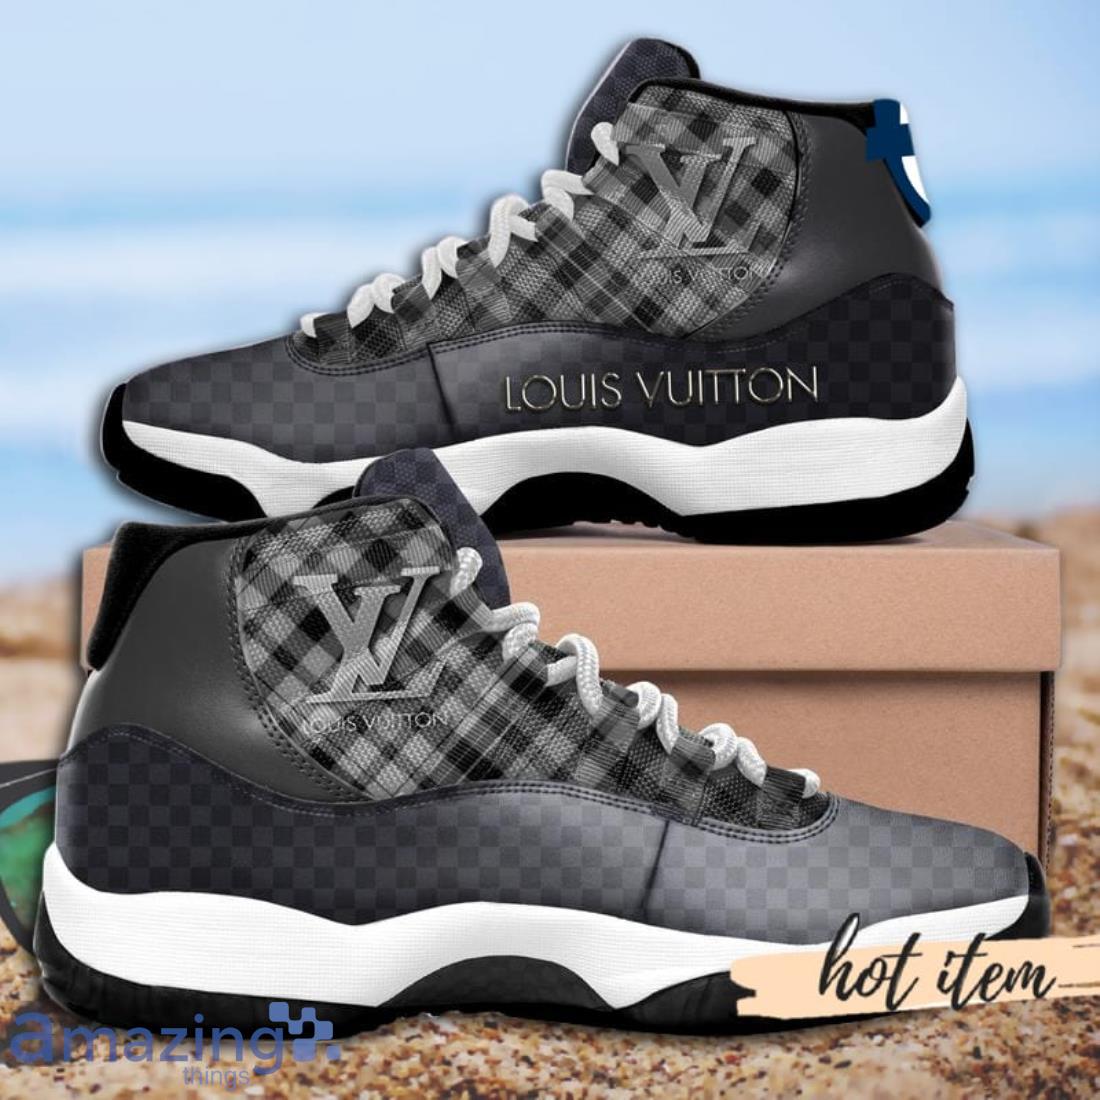 Louis Vuitton Ver 4 Air Jordan 11 Shoes Fashsion Shoes